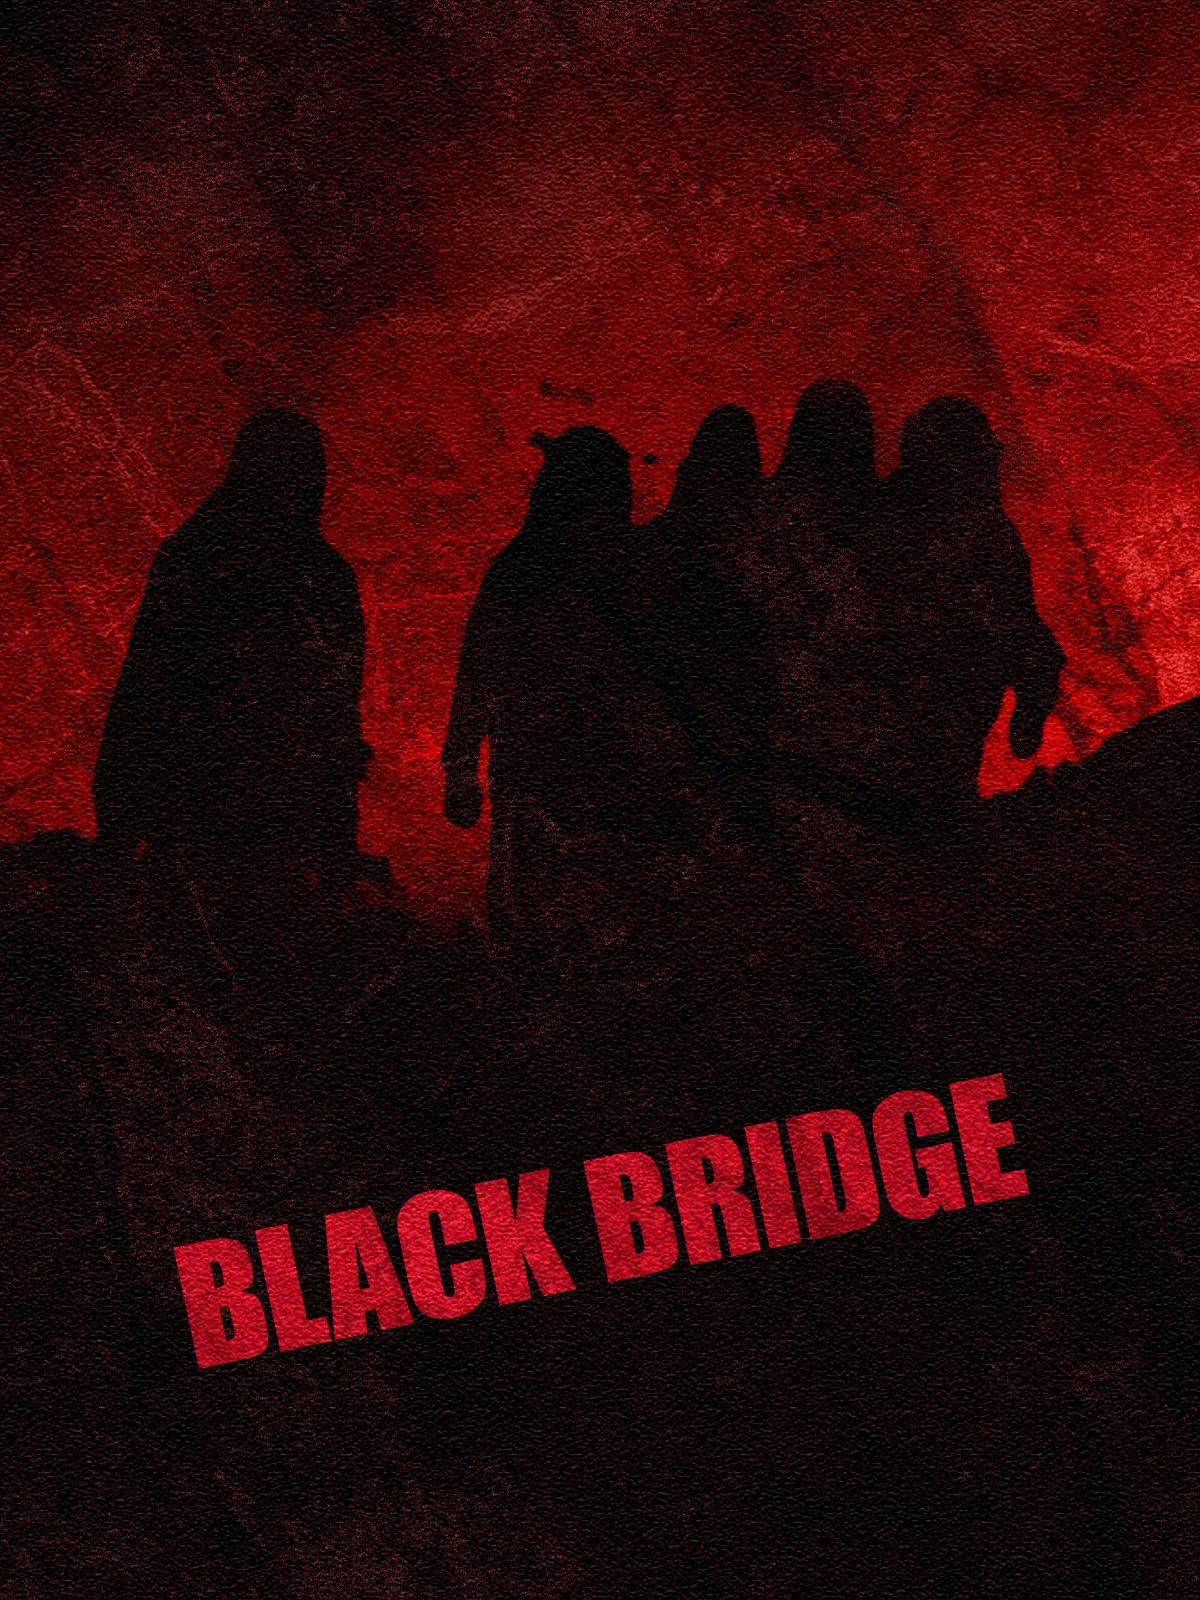 black bridge-poster.jpeg